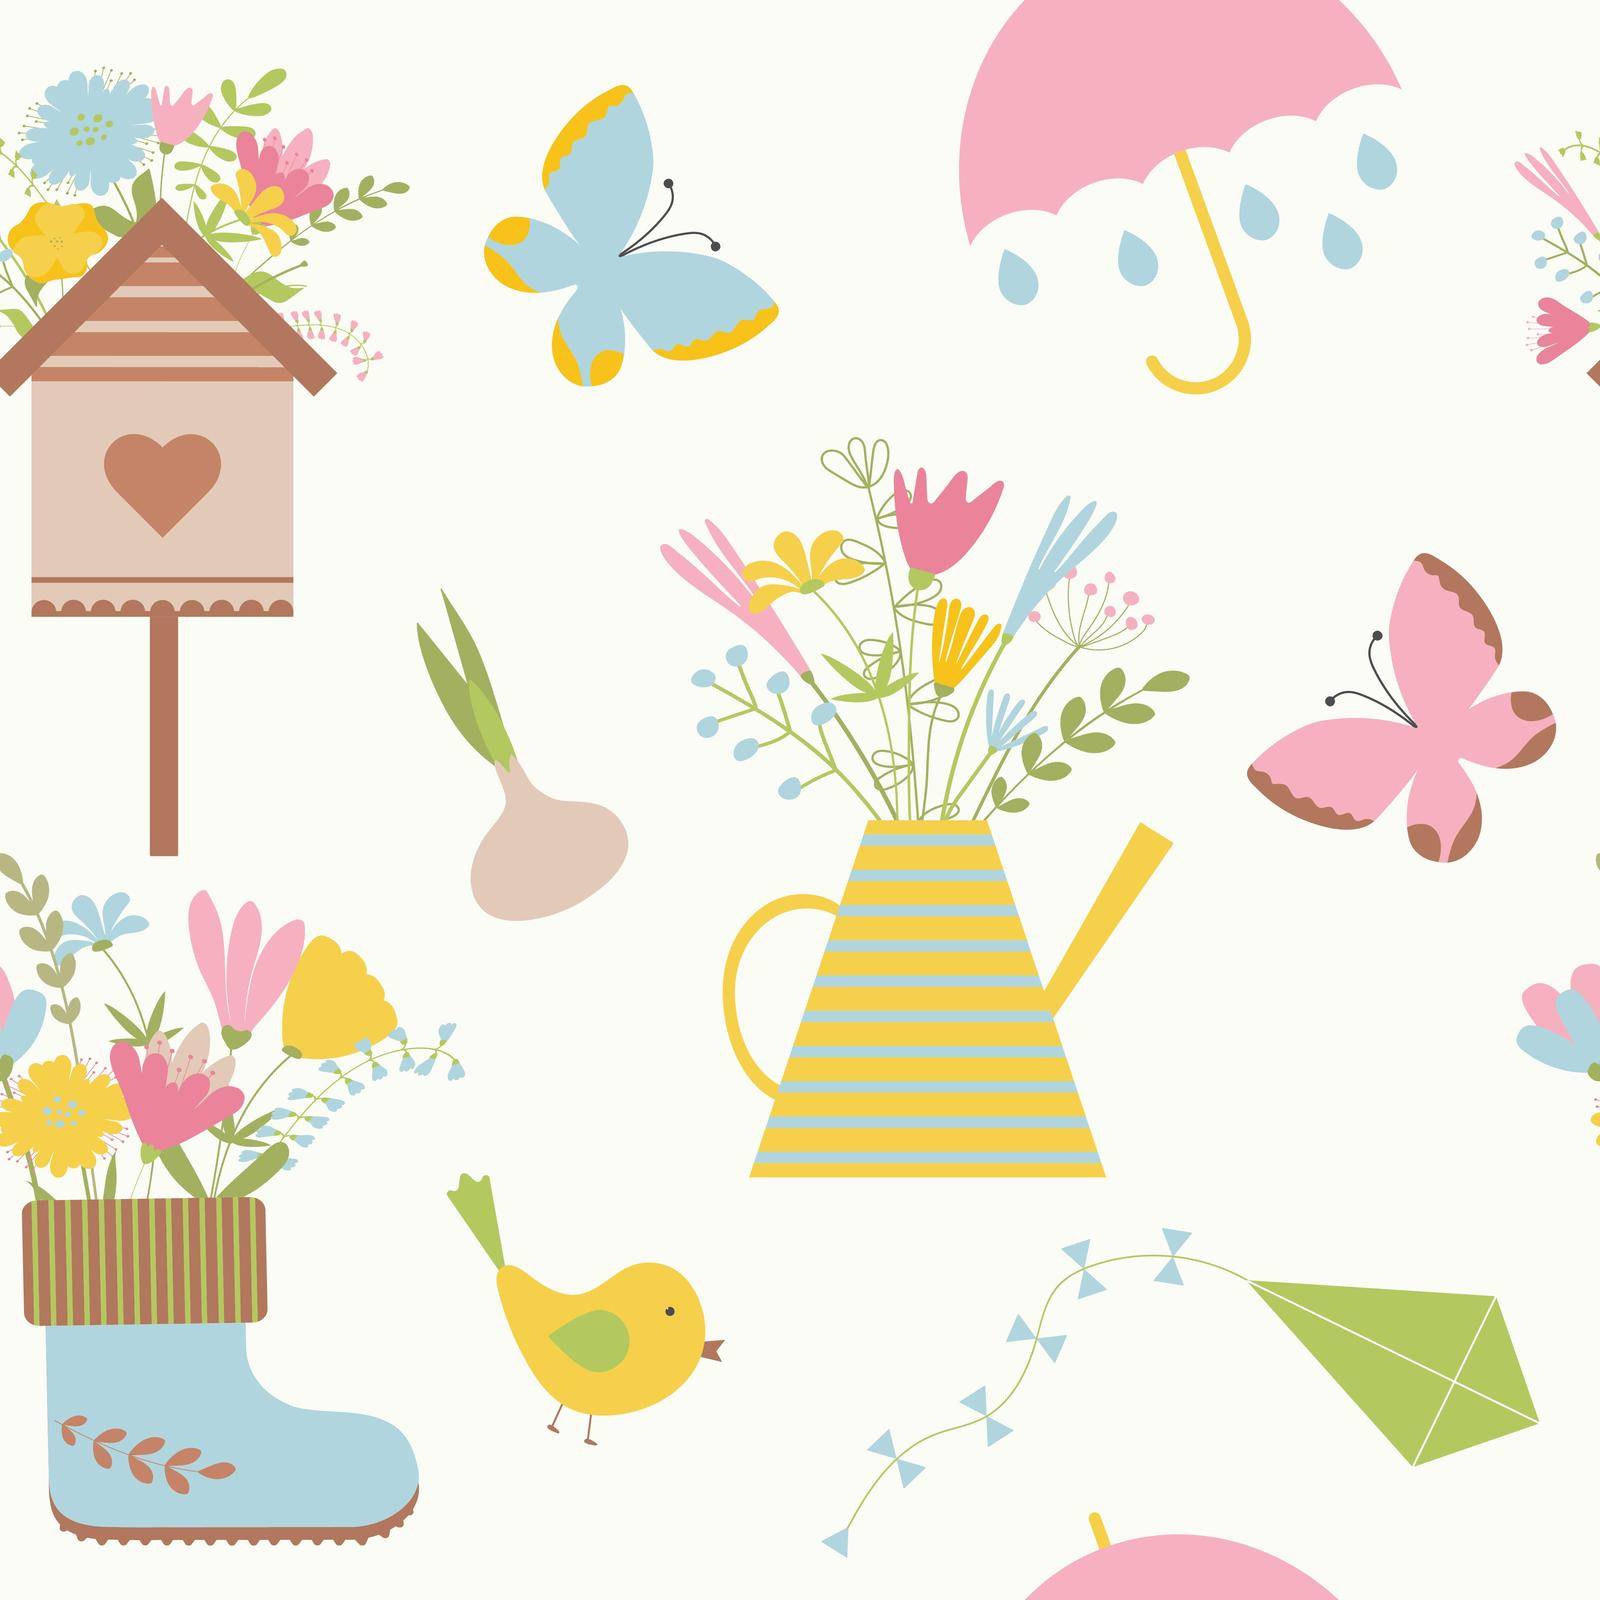 Spring summer pattern by tan4ikk1